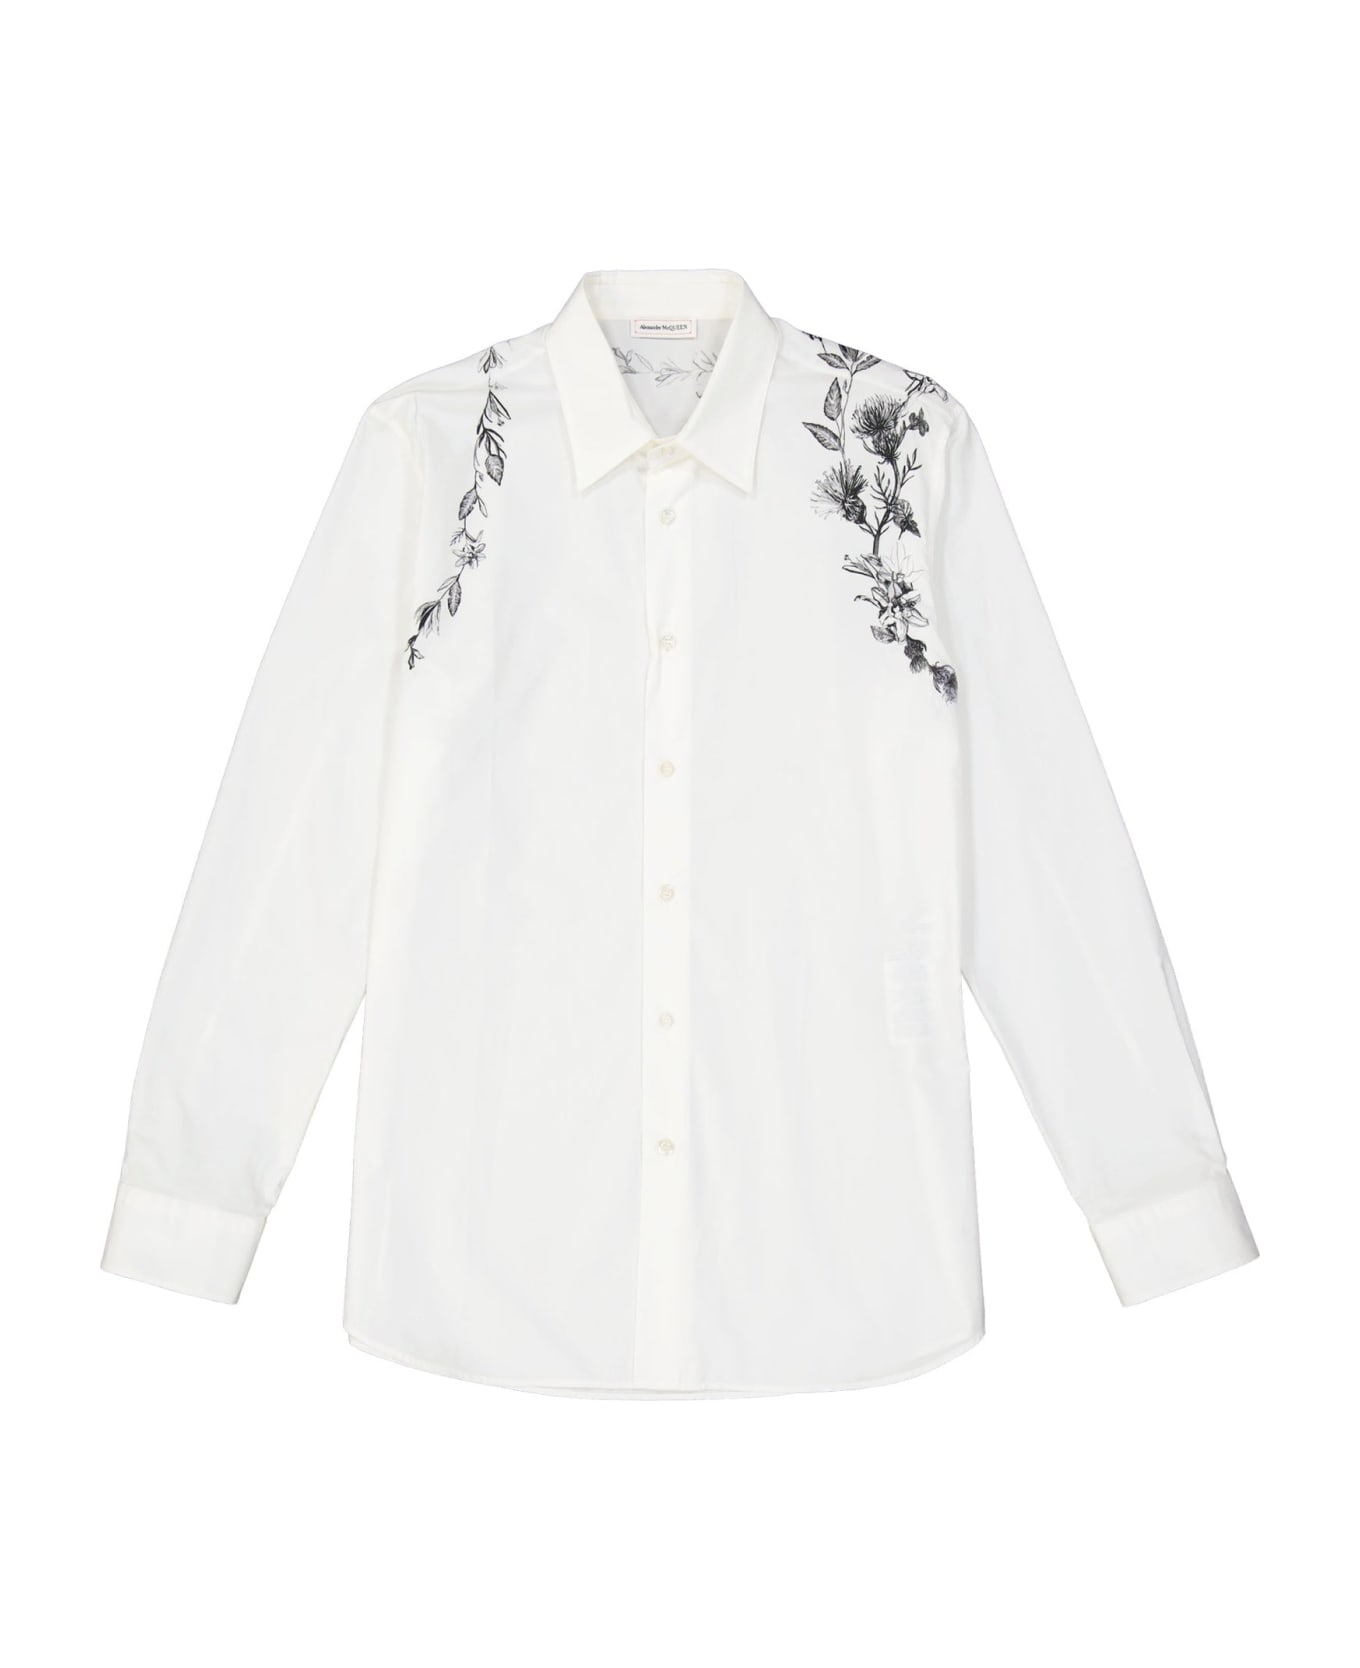 Alexander McQueen Printed Shirt - White